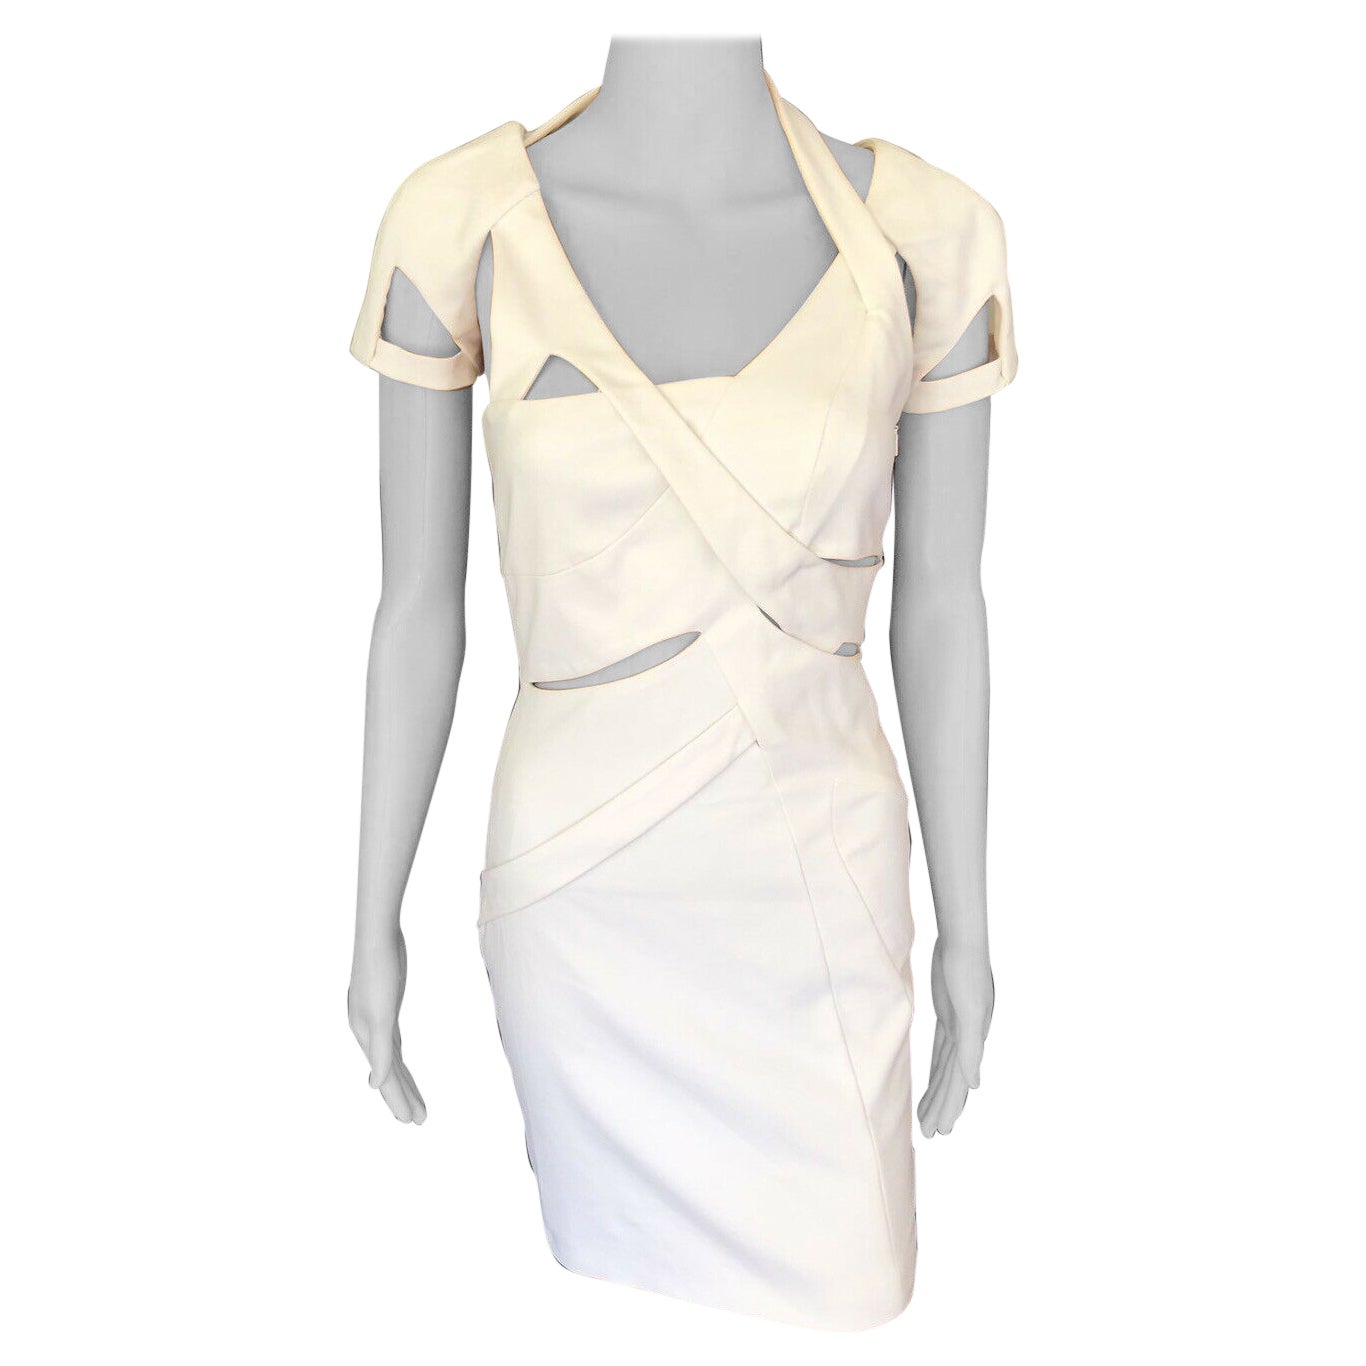 Gucci S/S 2010 Runway - Mini robe blanche à découpes